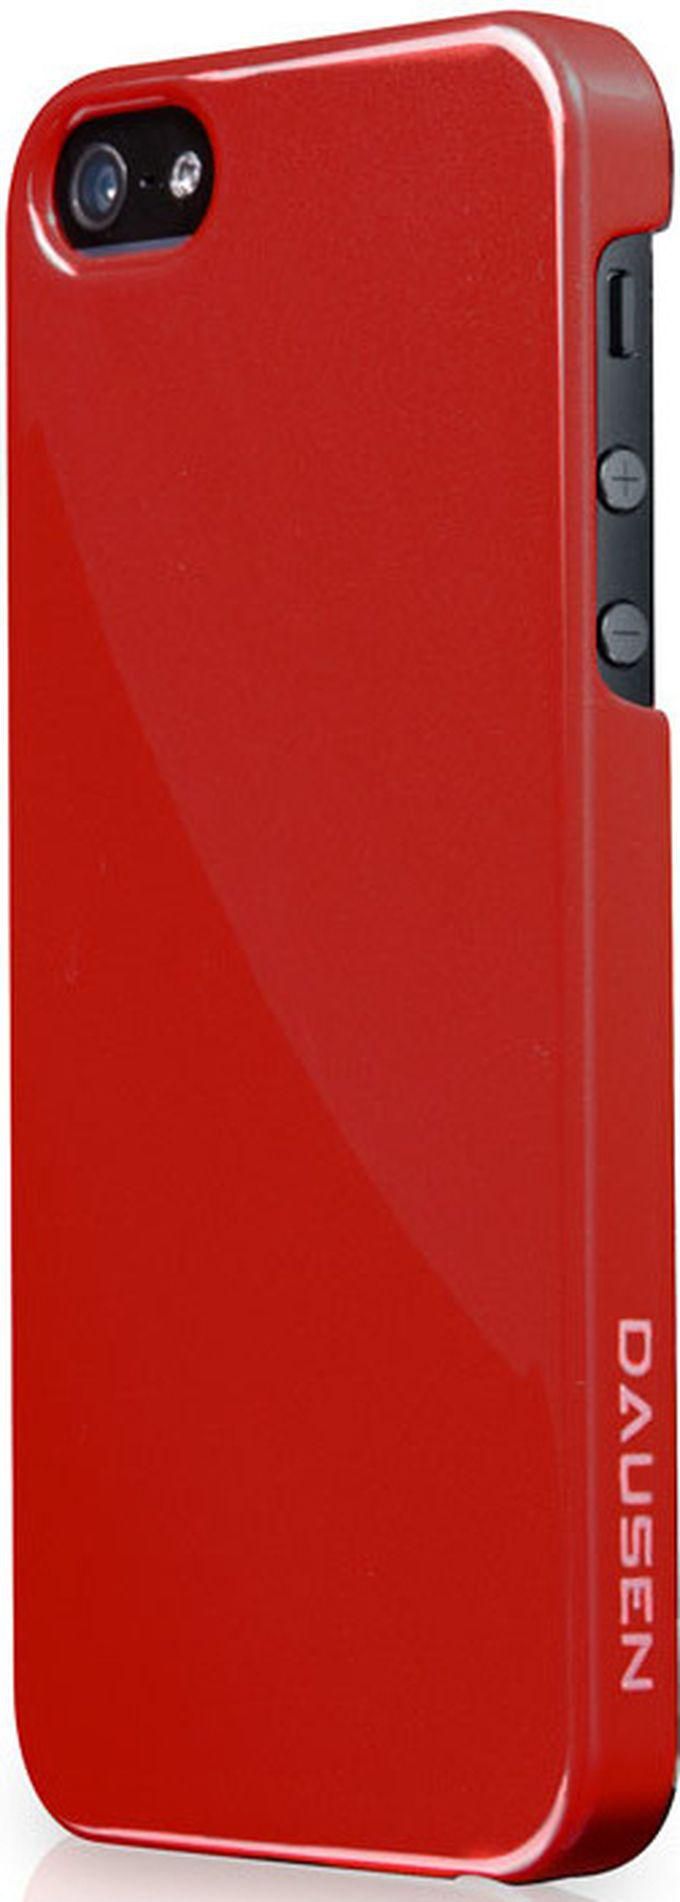 Dausen iPhone 5/ 5S DTi Metallic case - Red